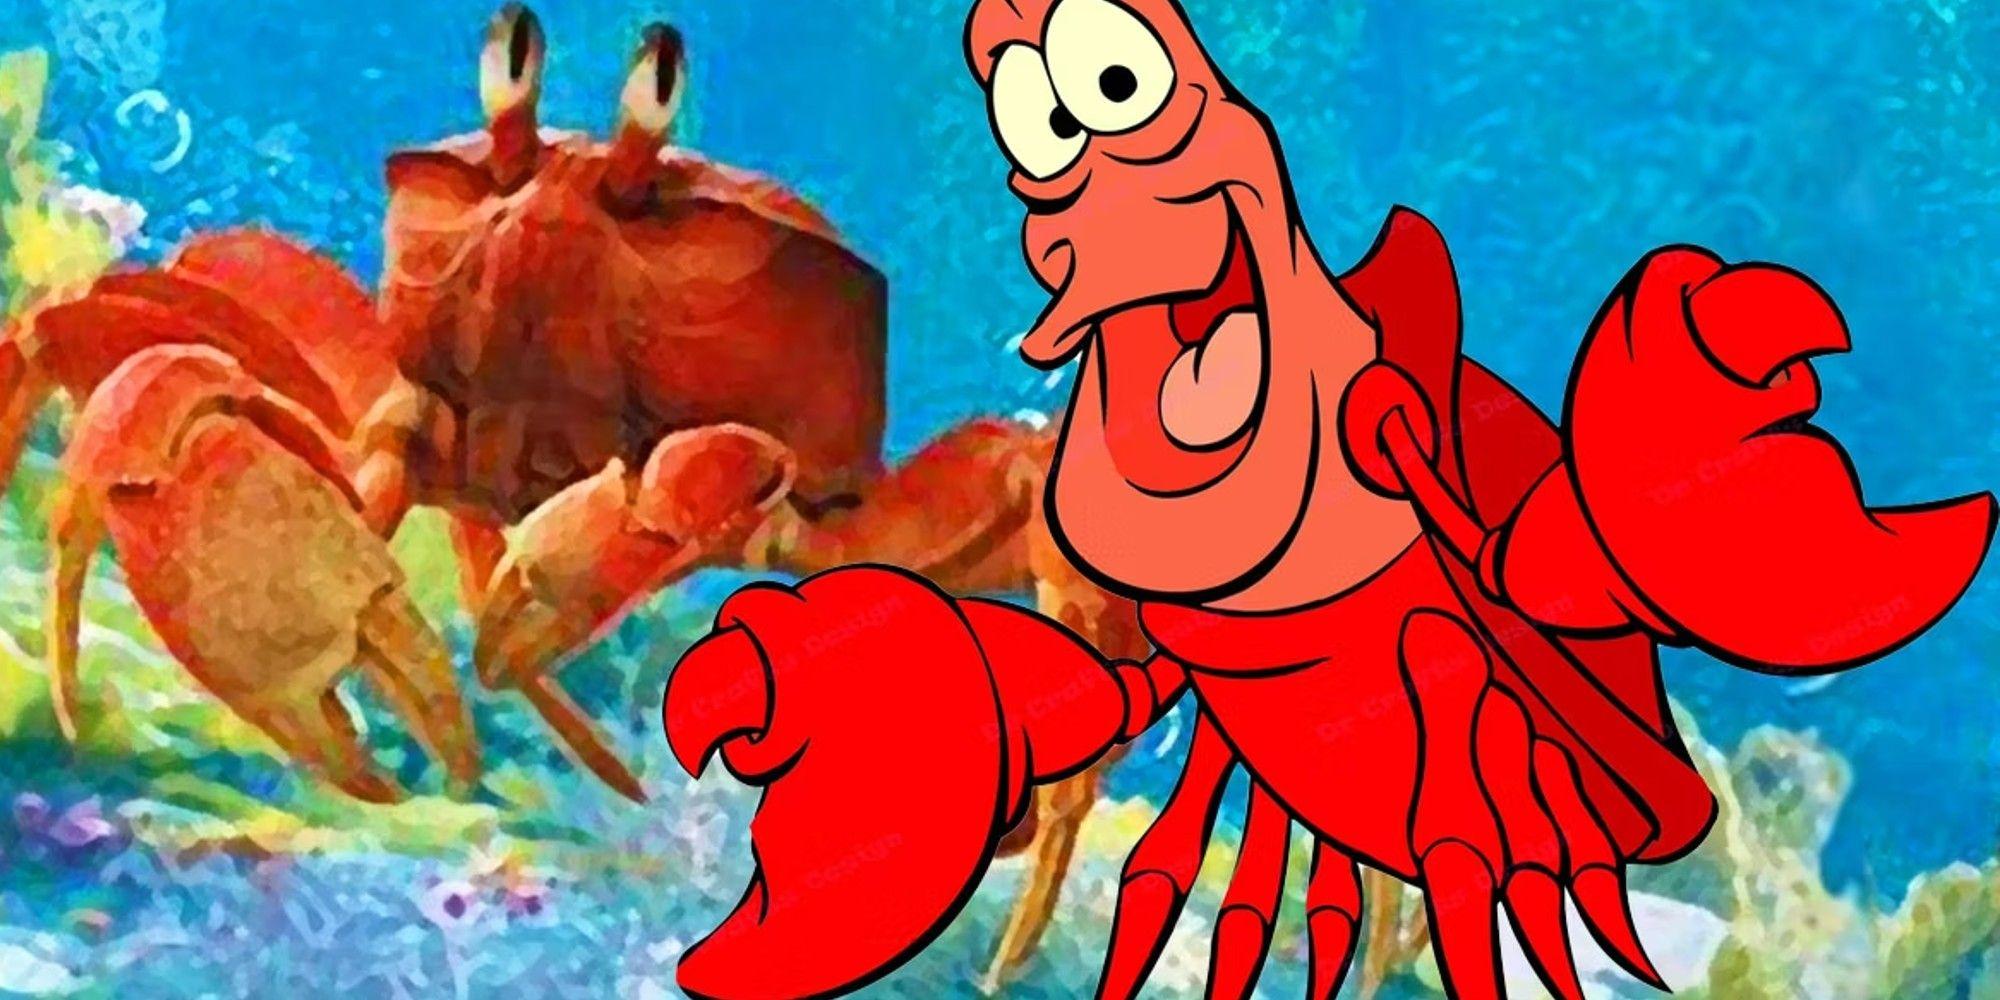 is sebastian a lobster or crab